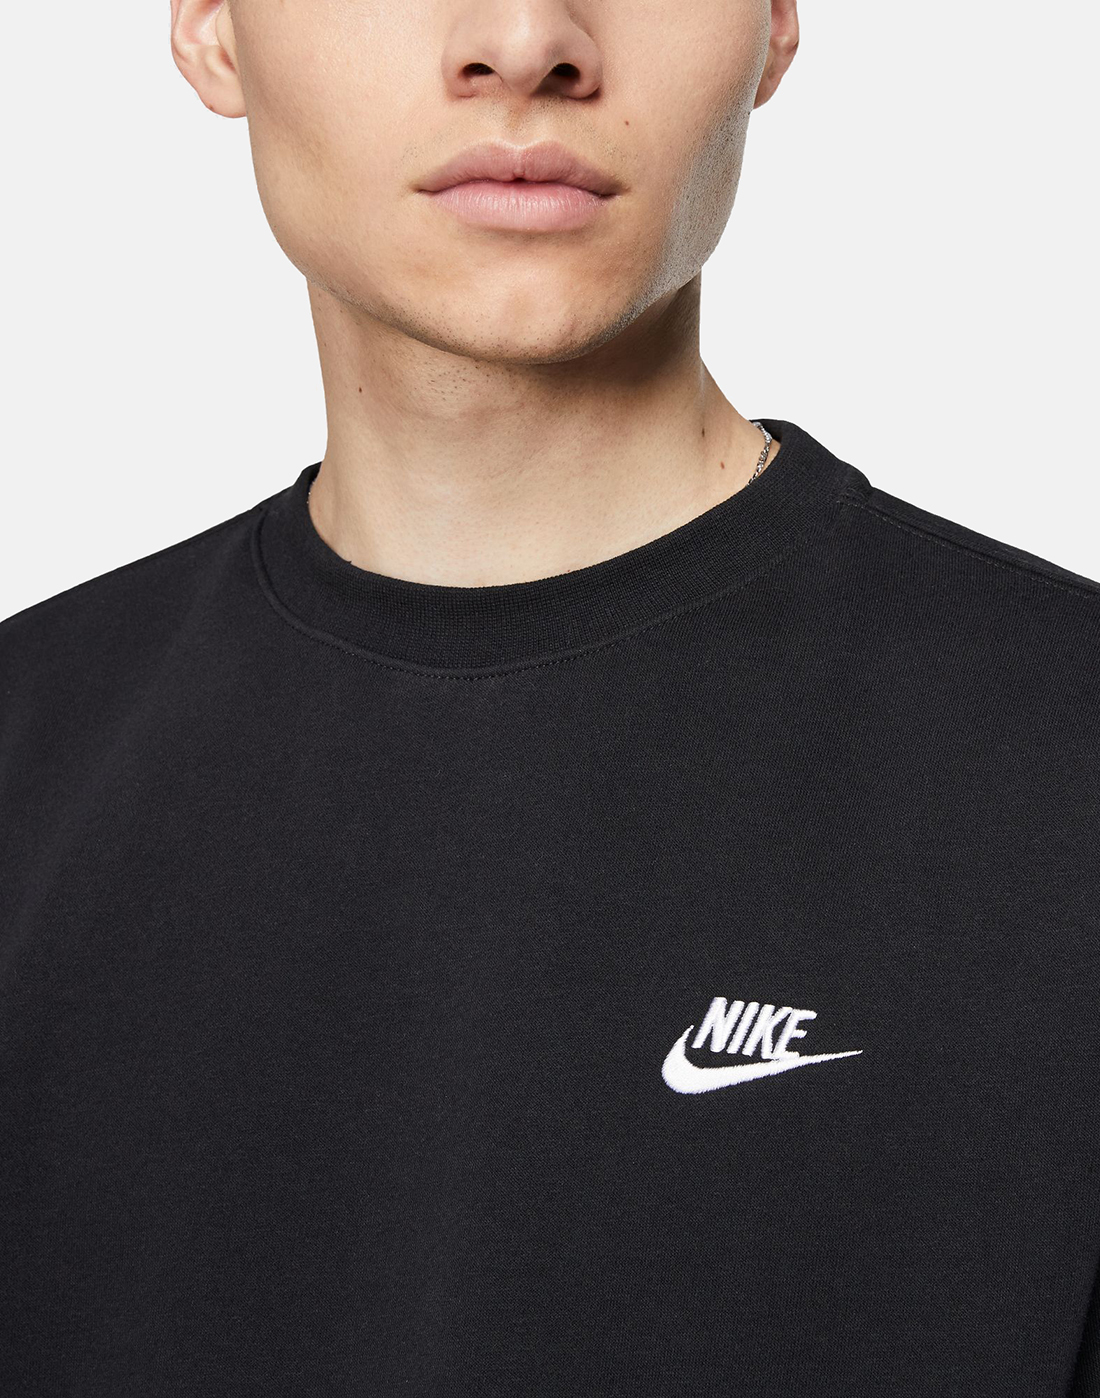 Men's Black Nike Sweatshirt | Life Style Sports